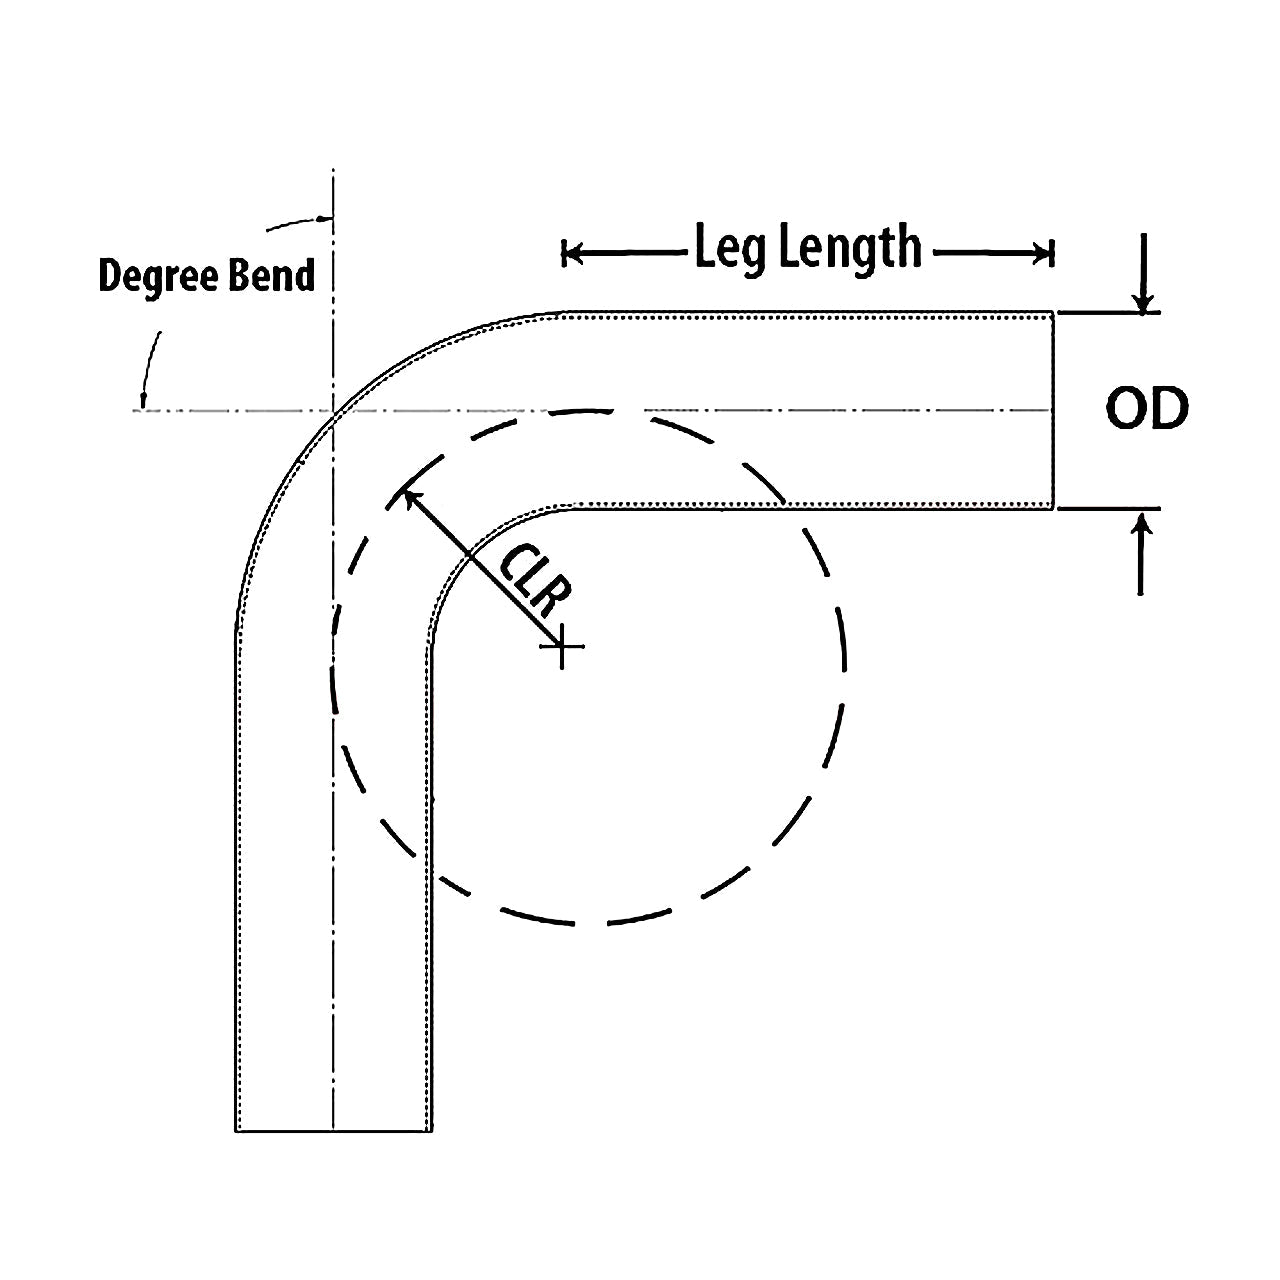 HPS 2-3/4" 70 Degree Bend 6061 Aluminum Elbow Pipe Tubing with 4-5/16" Center Line Radius